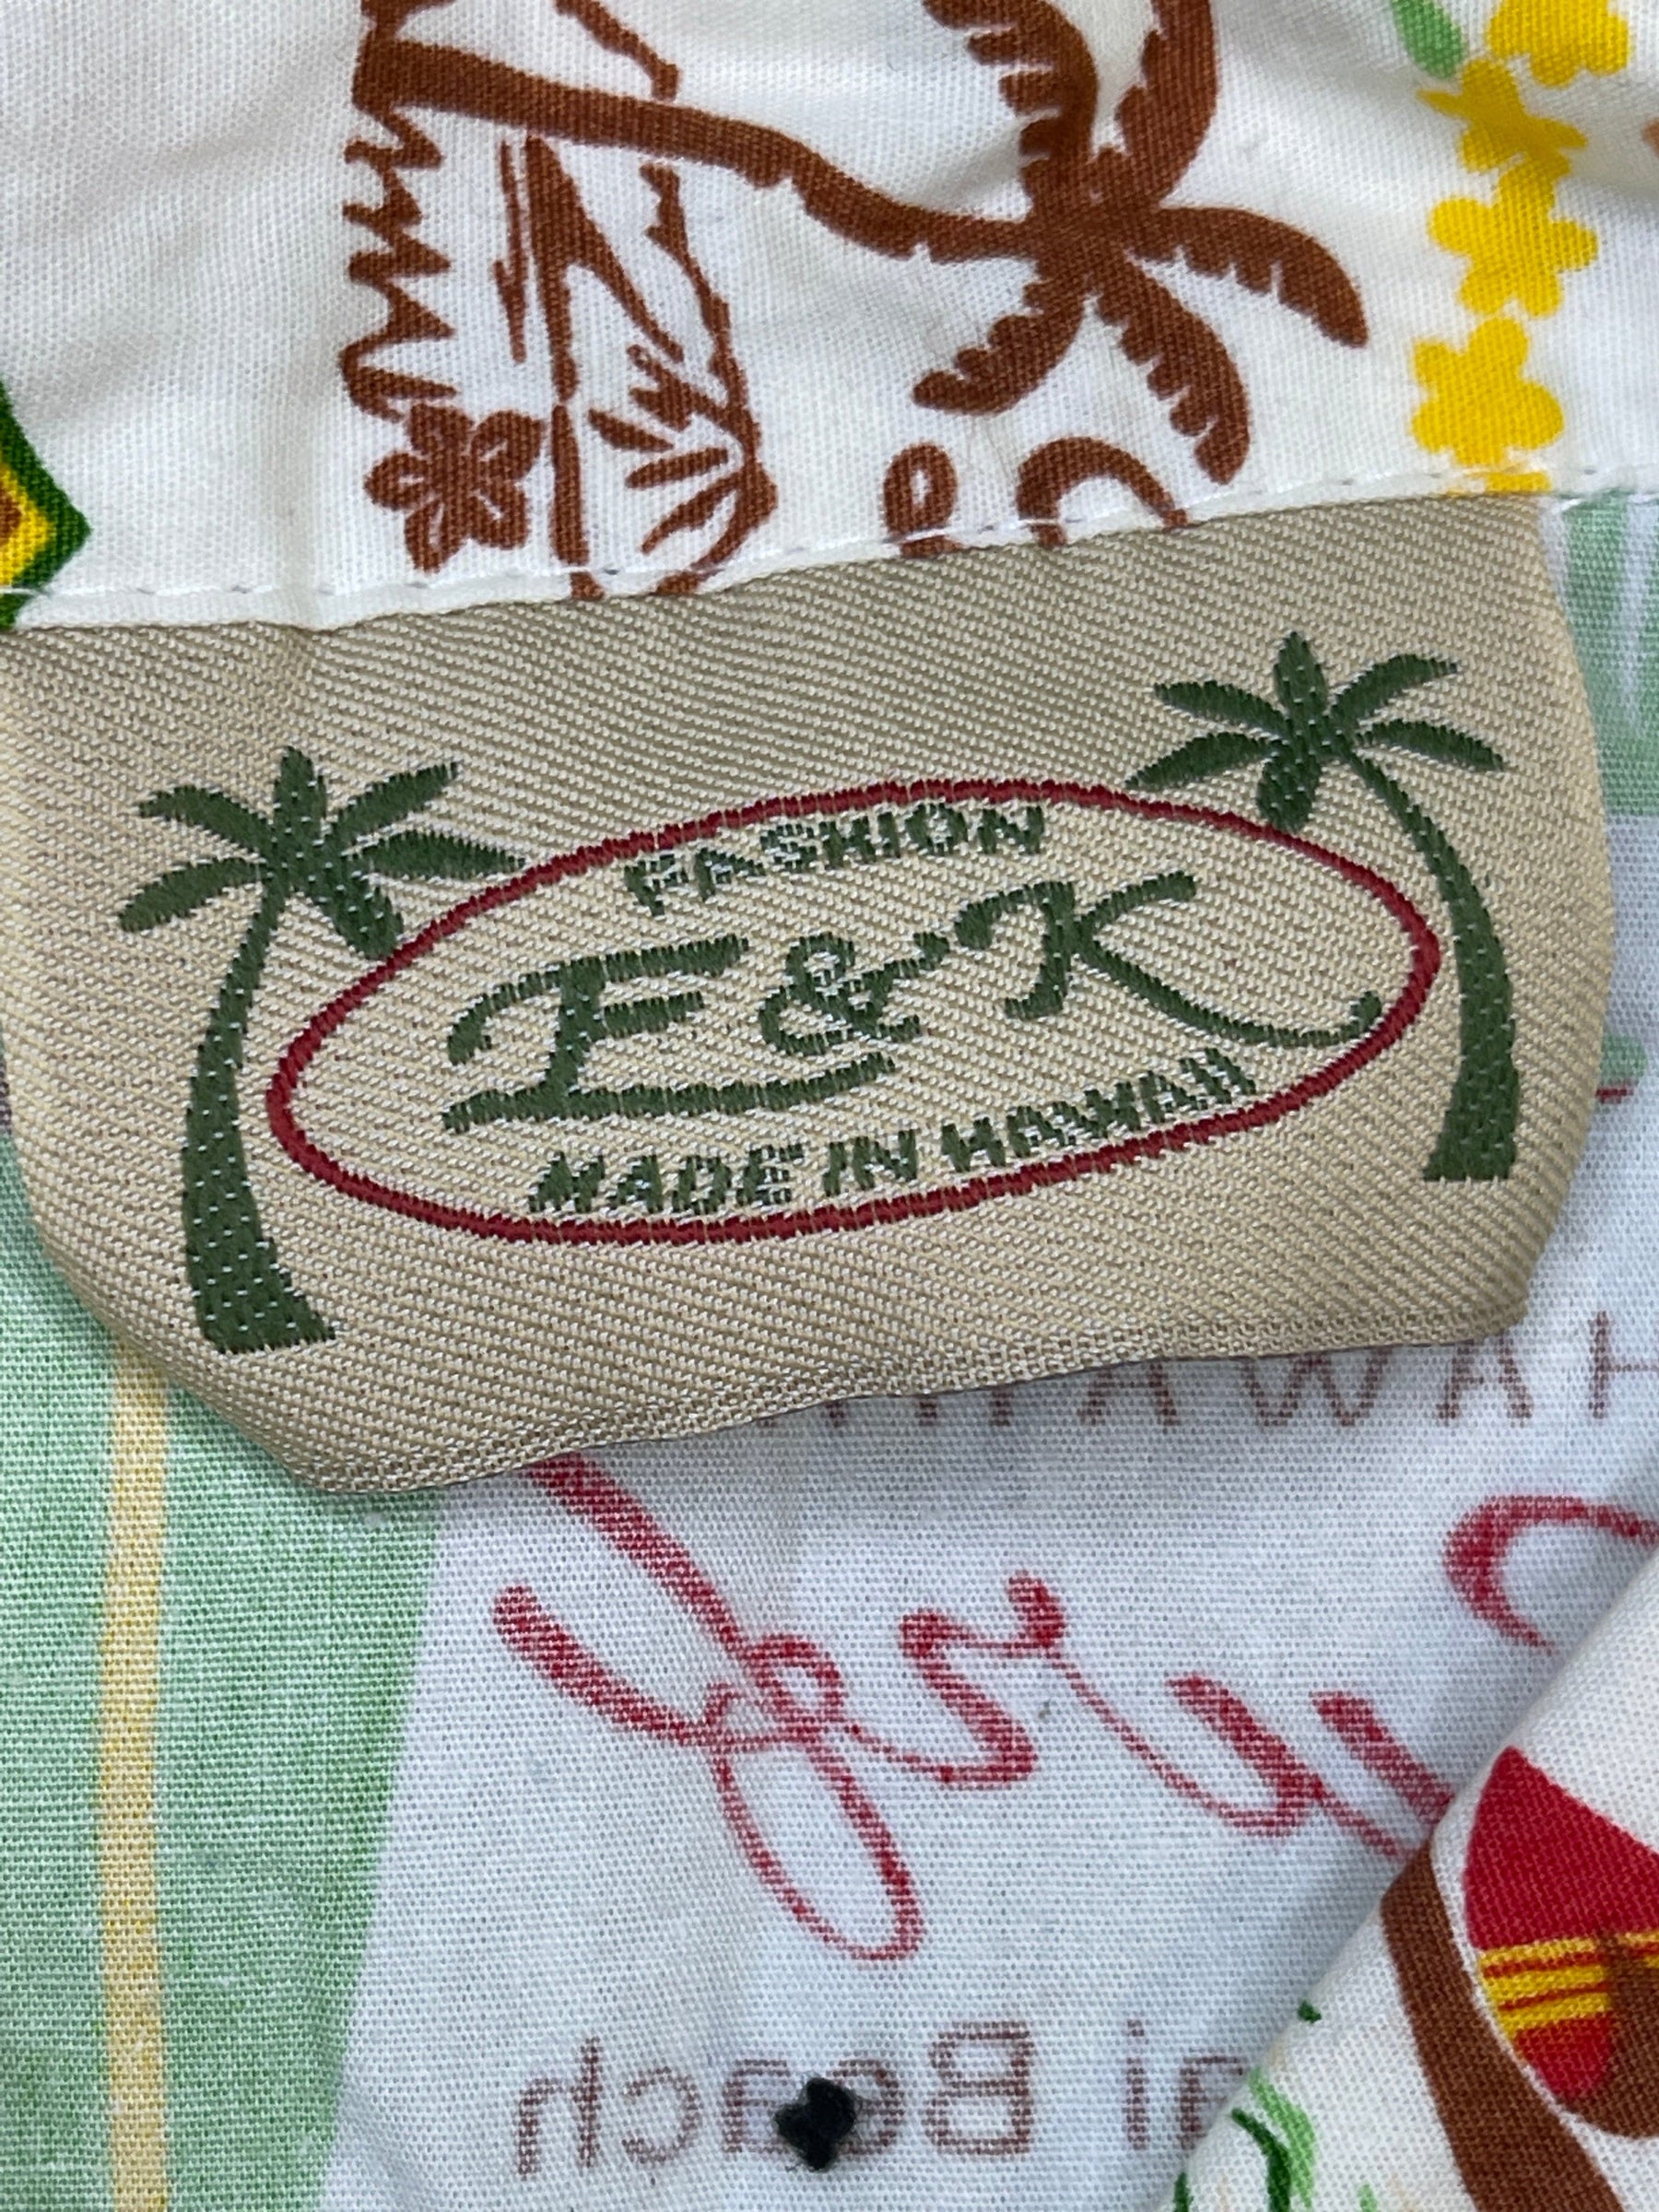 Made in Hawaii Surfing Location Print Hawaiian Aloha Shirt Youth X-Small 4